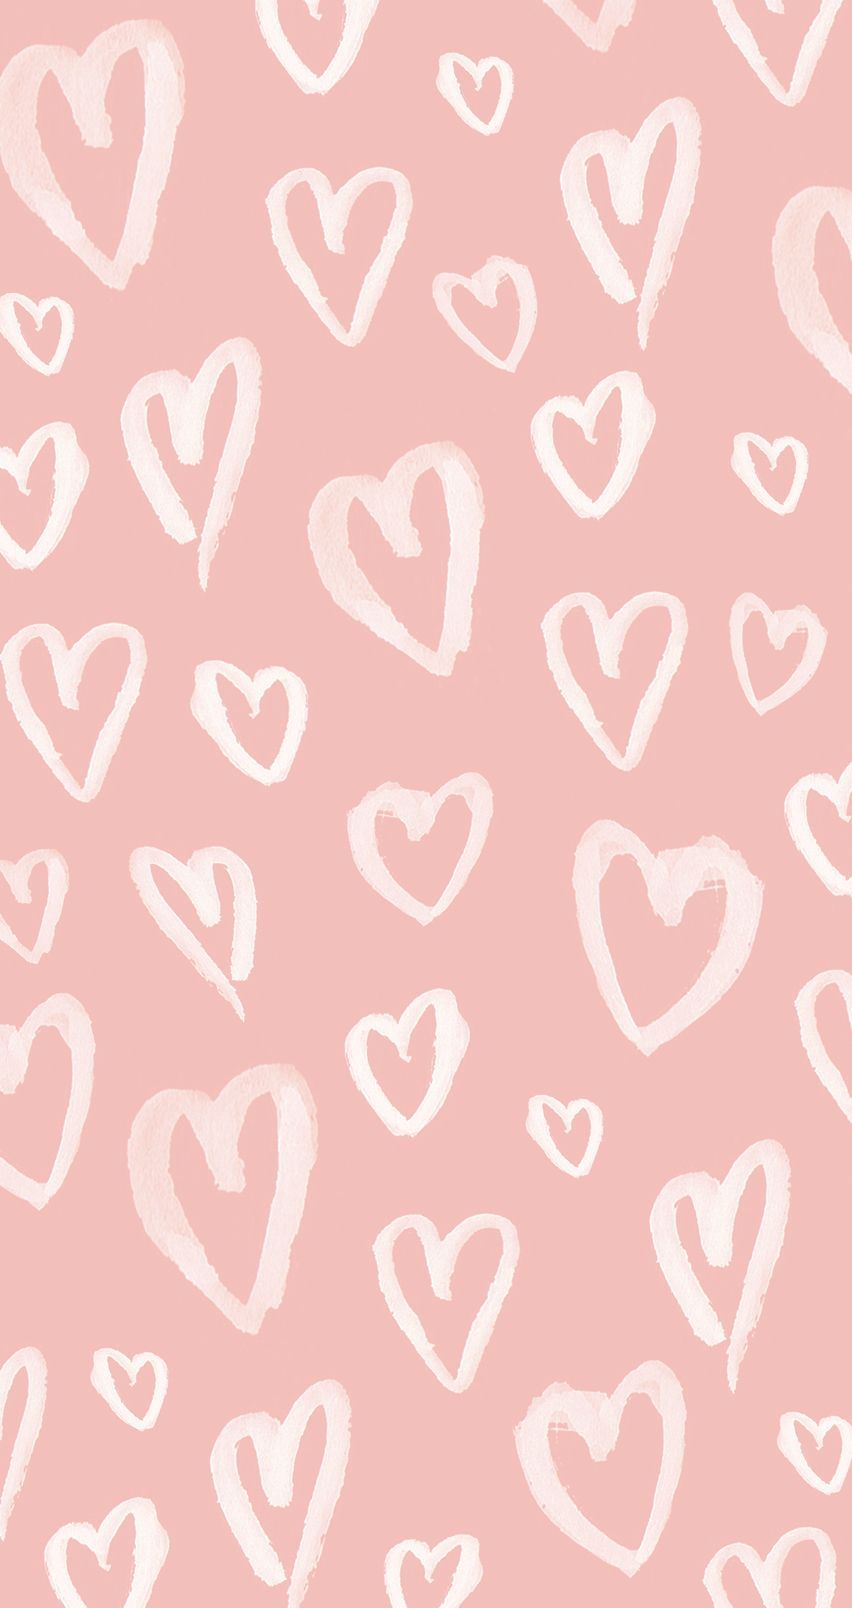 Pink Heart Aesthetic Wallpaper